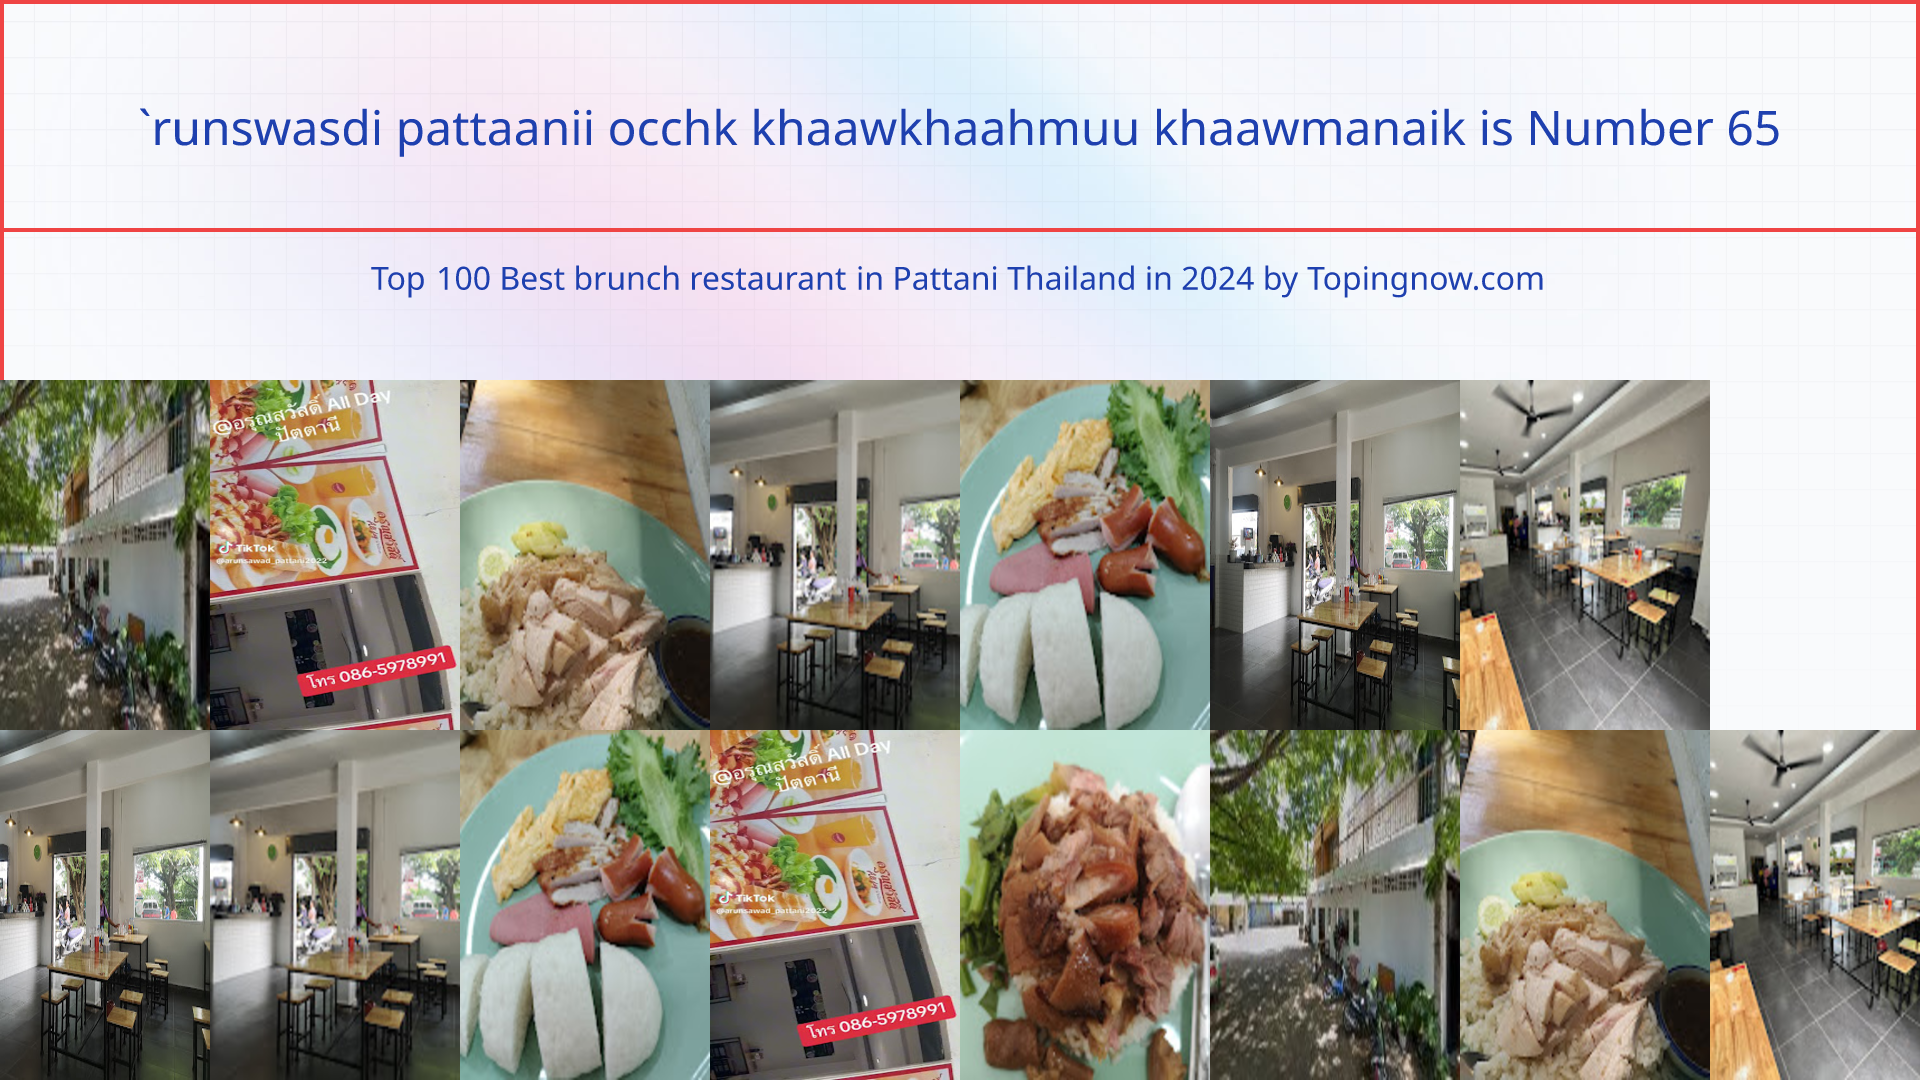 `runswasdi pattaanii occhk khaawkhaahmuu khaawmanaik: Top 100 Best brunch restaurant in Pattani Thailand in 2024